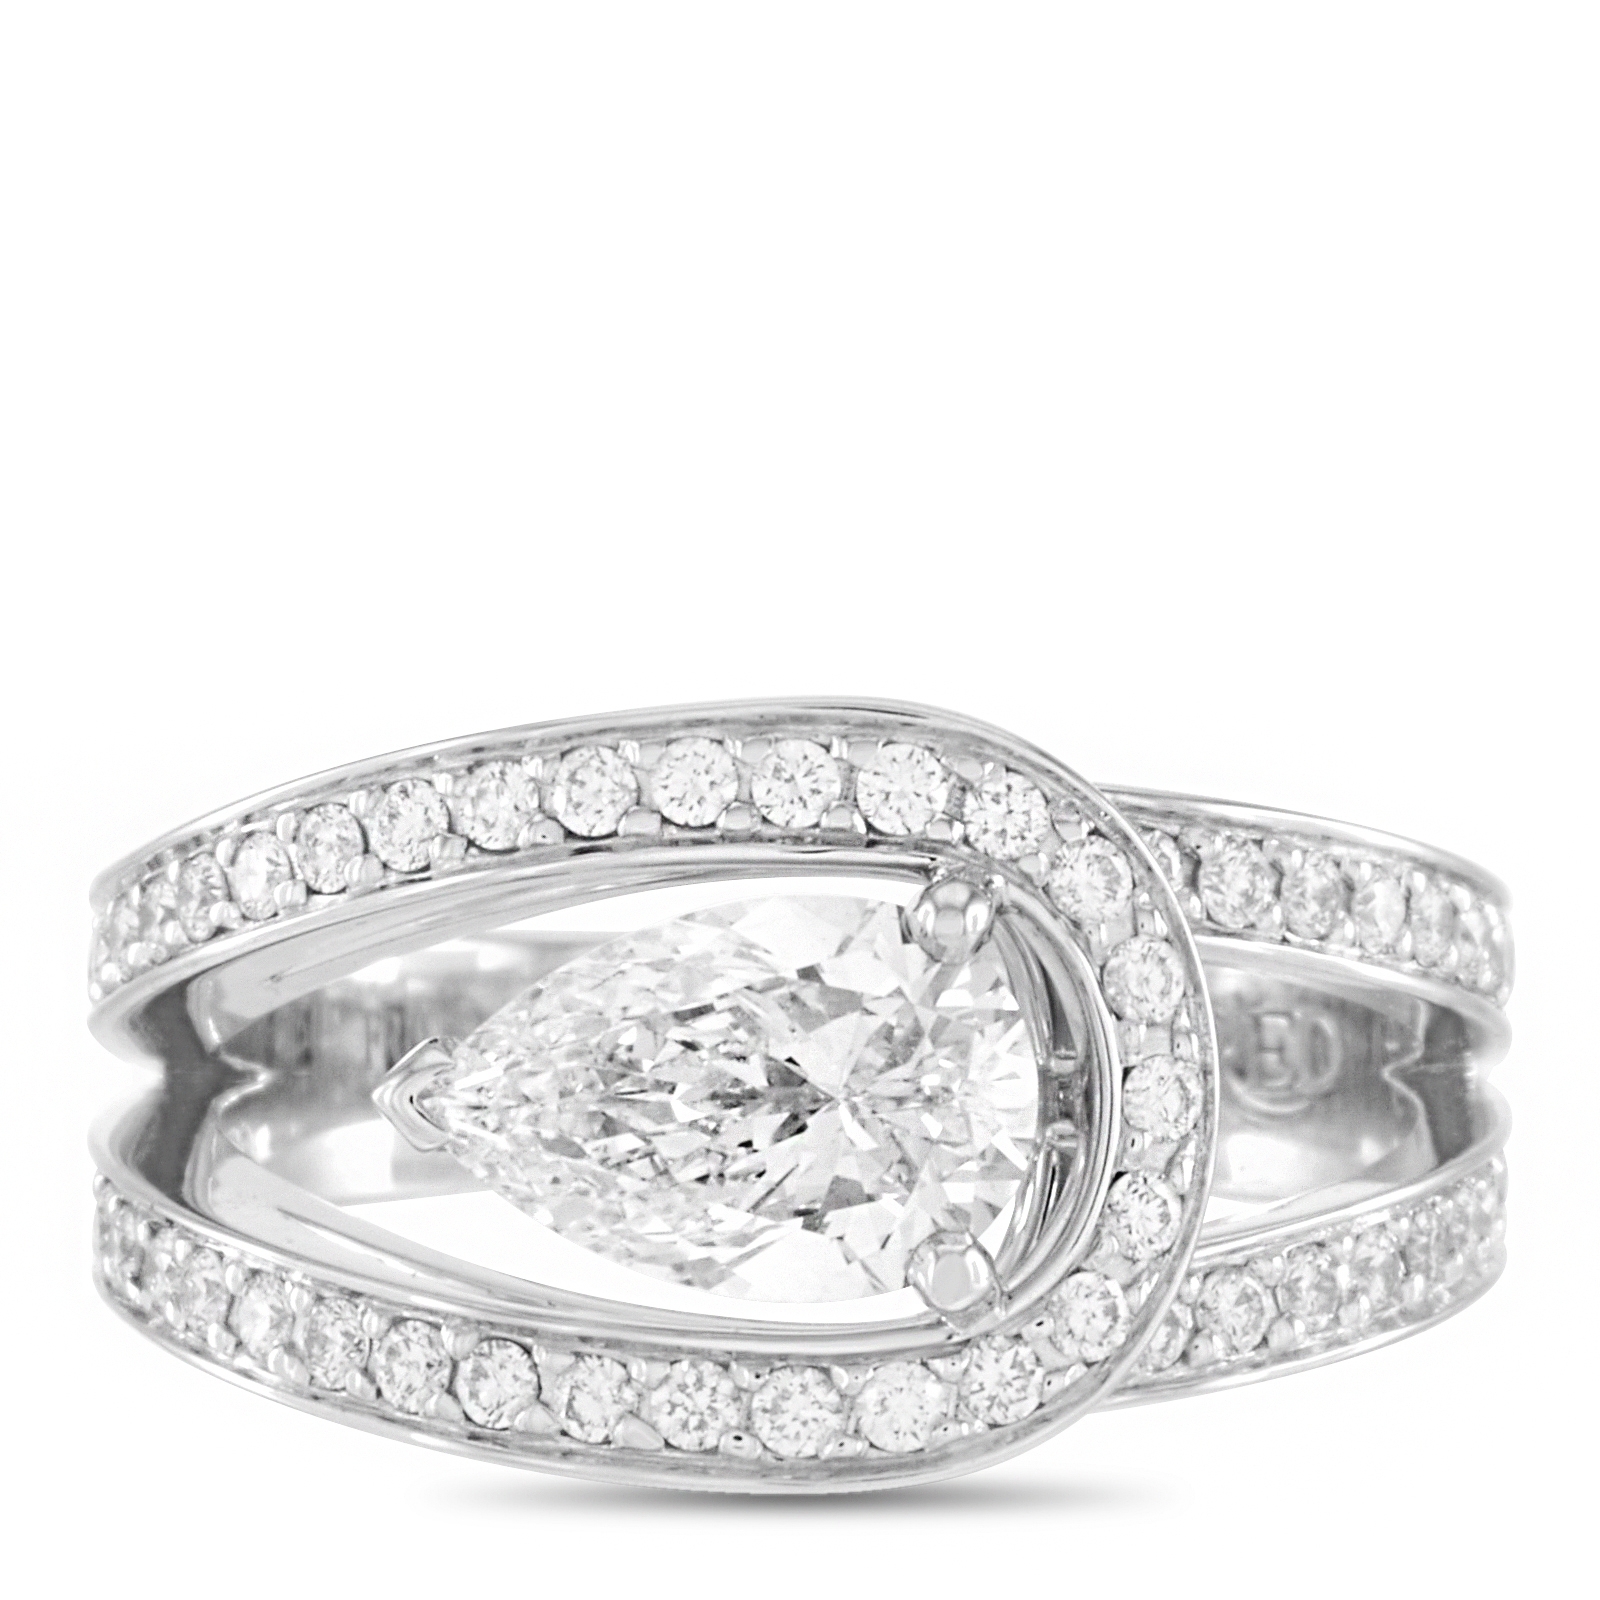 Fred of Paris Lovelight Platinum and Diamond Ring